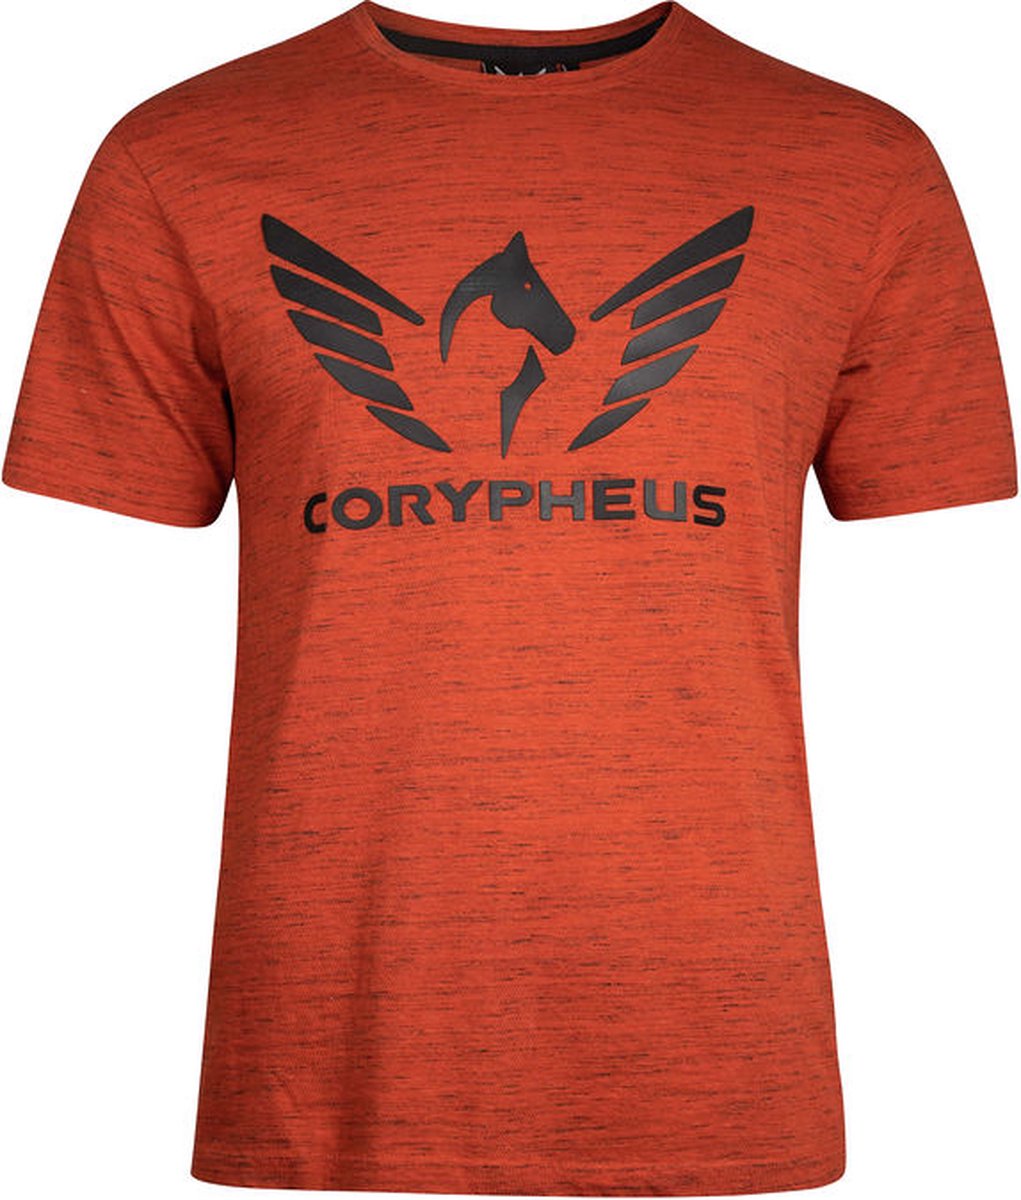 Corypheus Burnt Henna Men's T-Shirt - Small